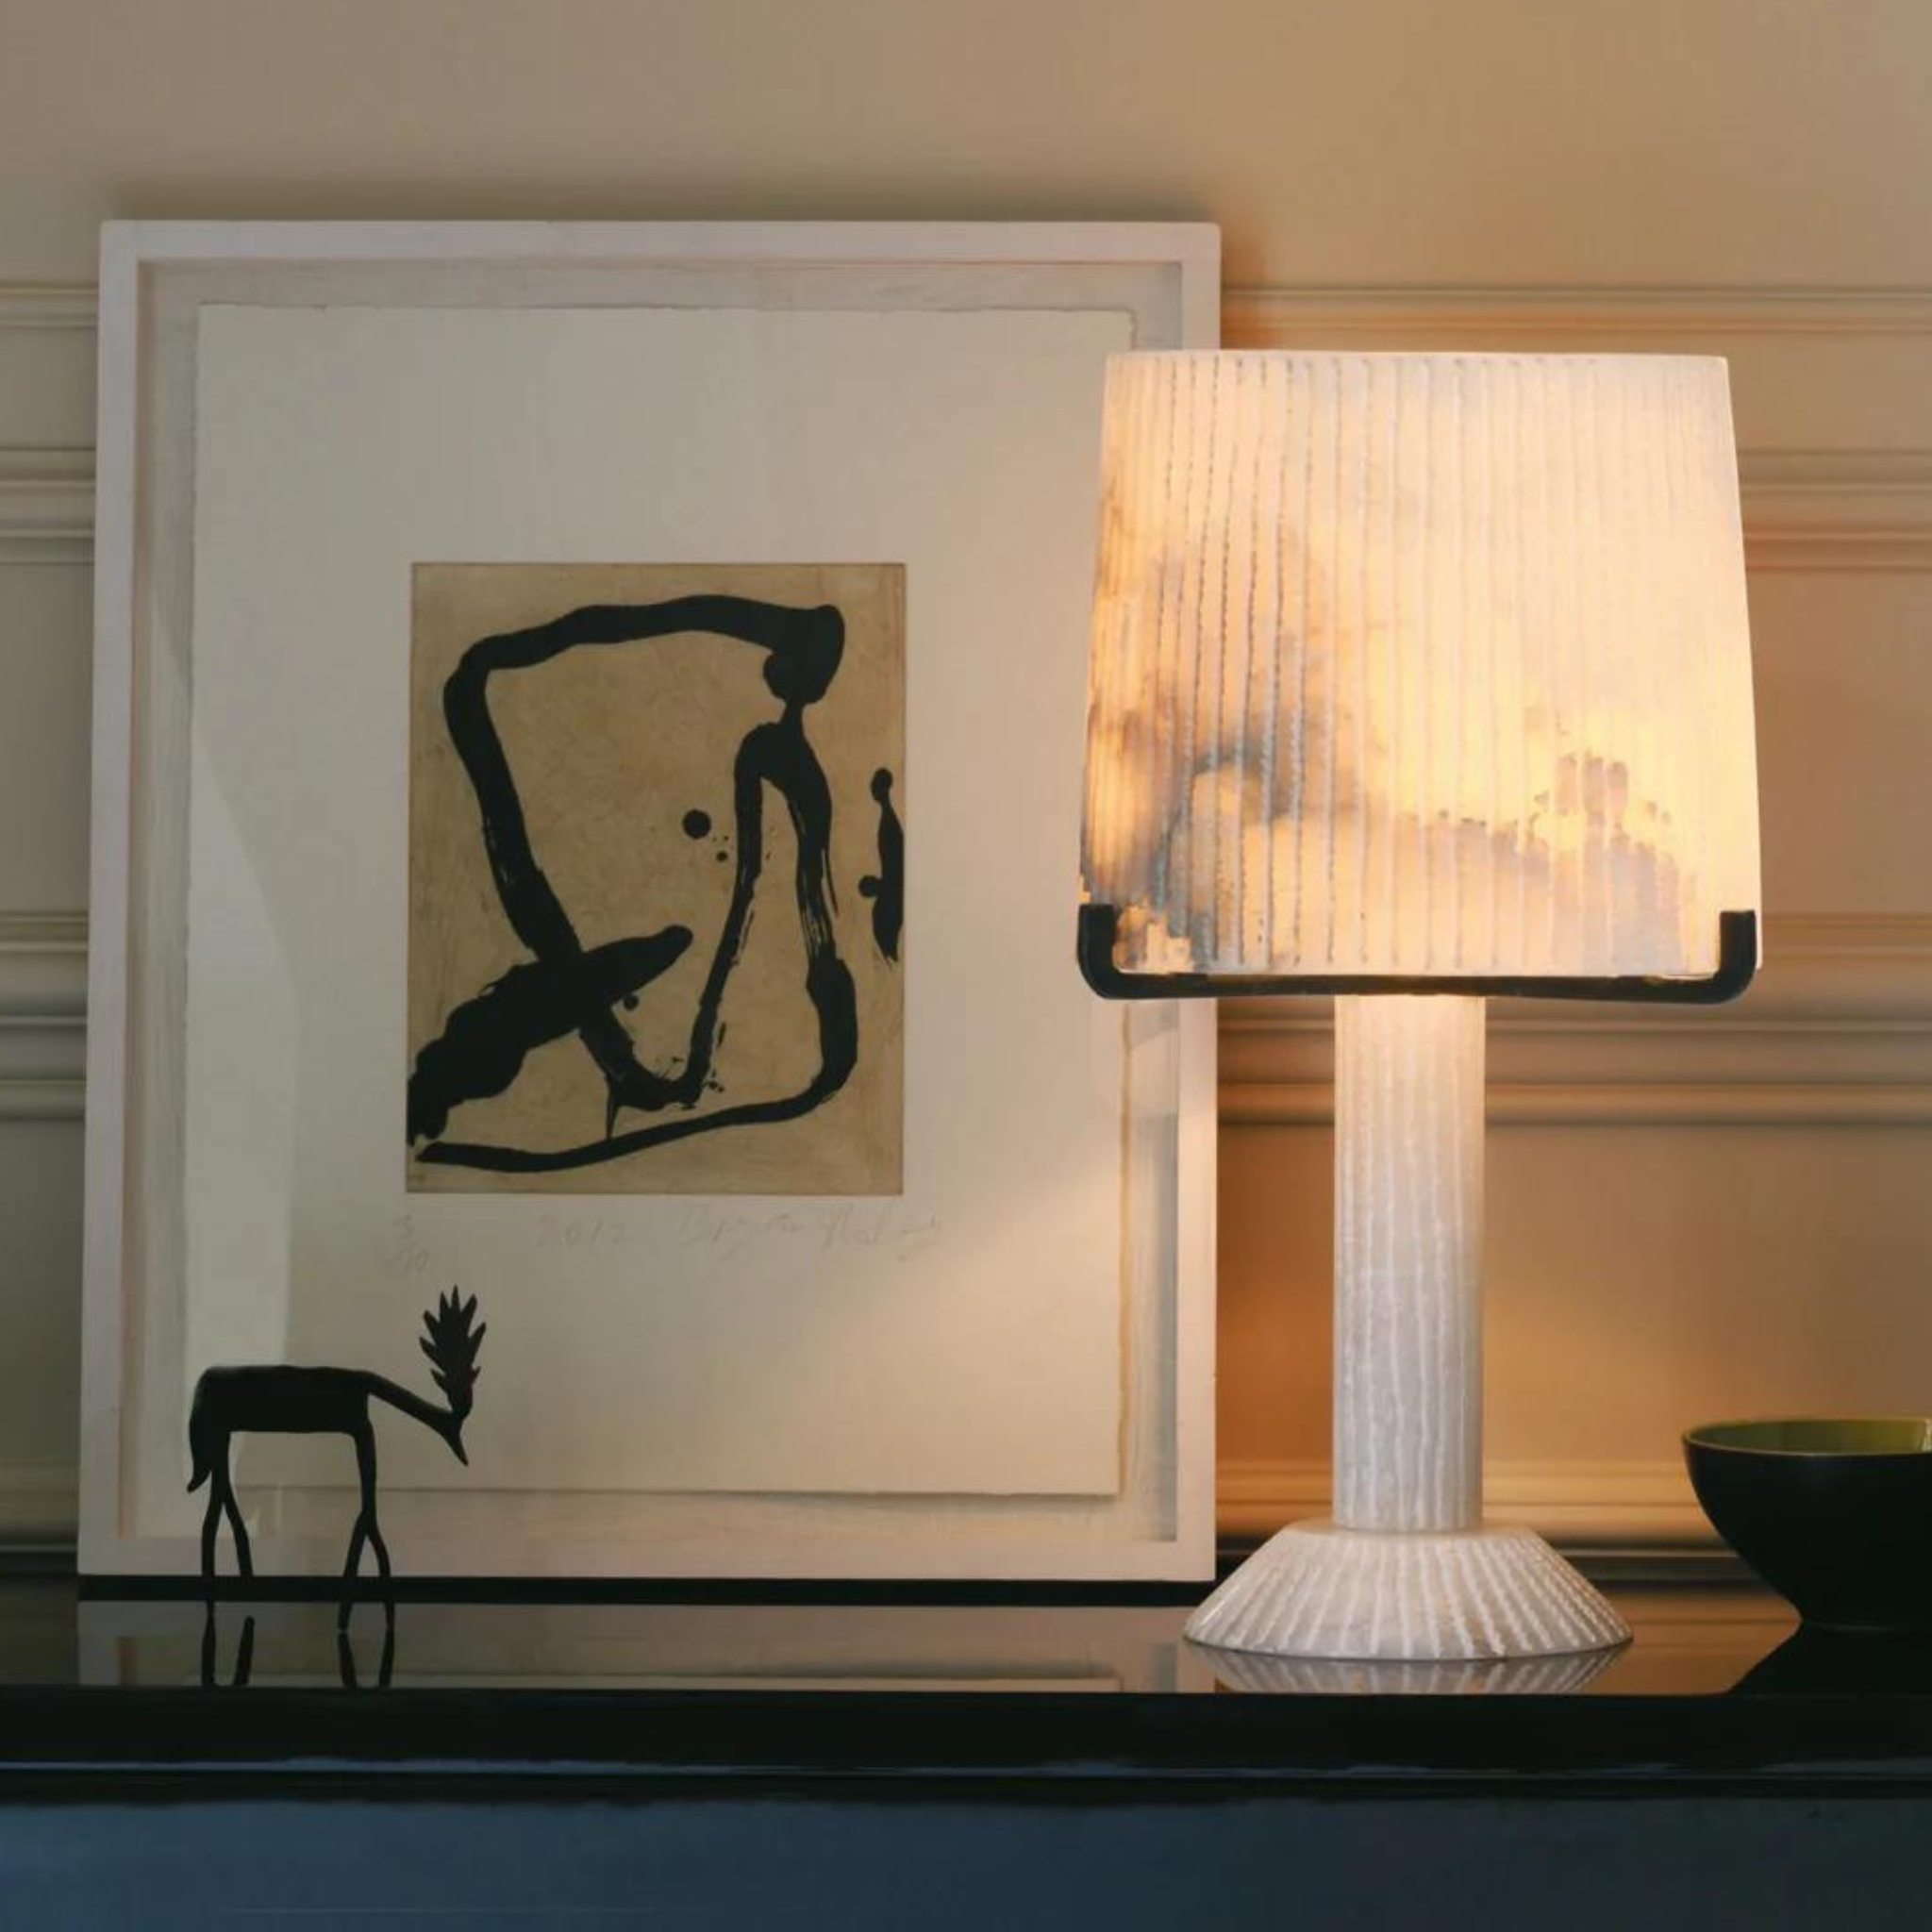 ACROPOLIS TABLE LAMP - CTO LIGHTING | Modern Furniture + Decor